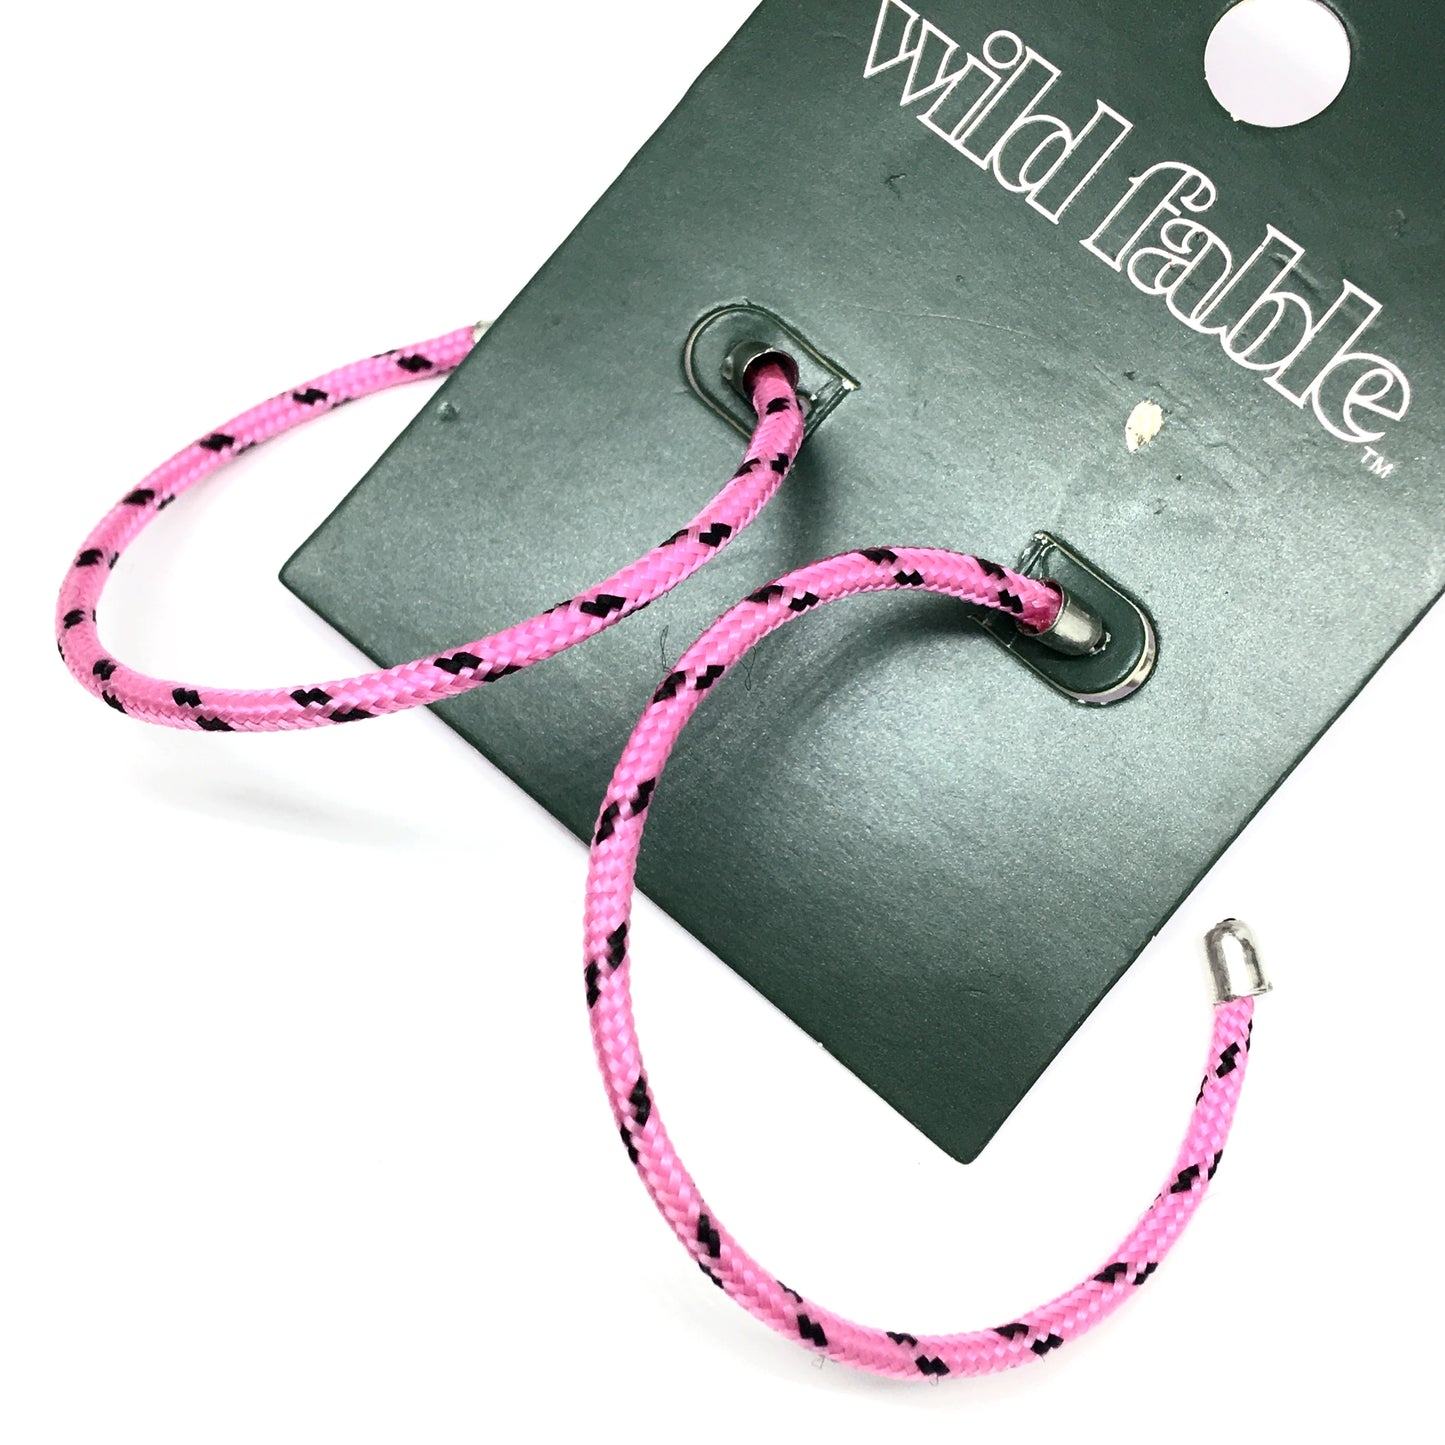 Fashion Jewelry - 90s Flair Pink Black Friendship Bracelet Style Hoop Earrings